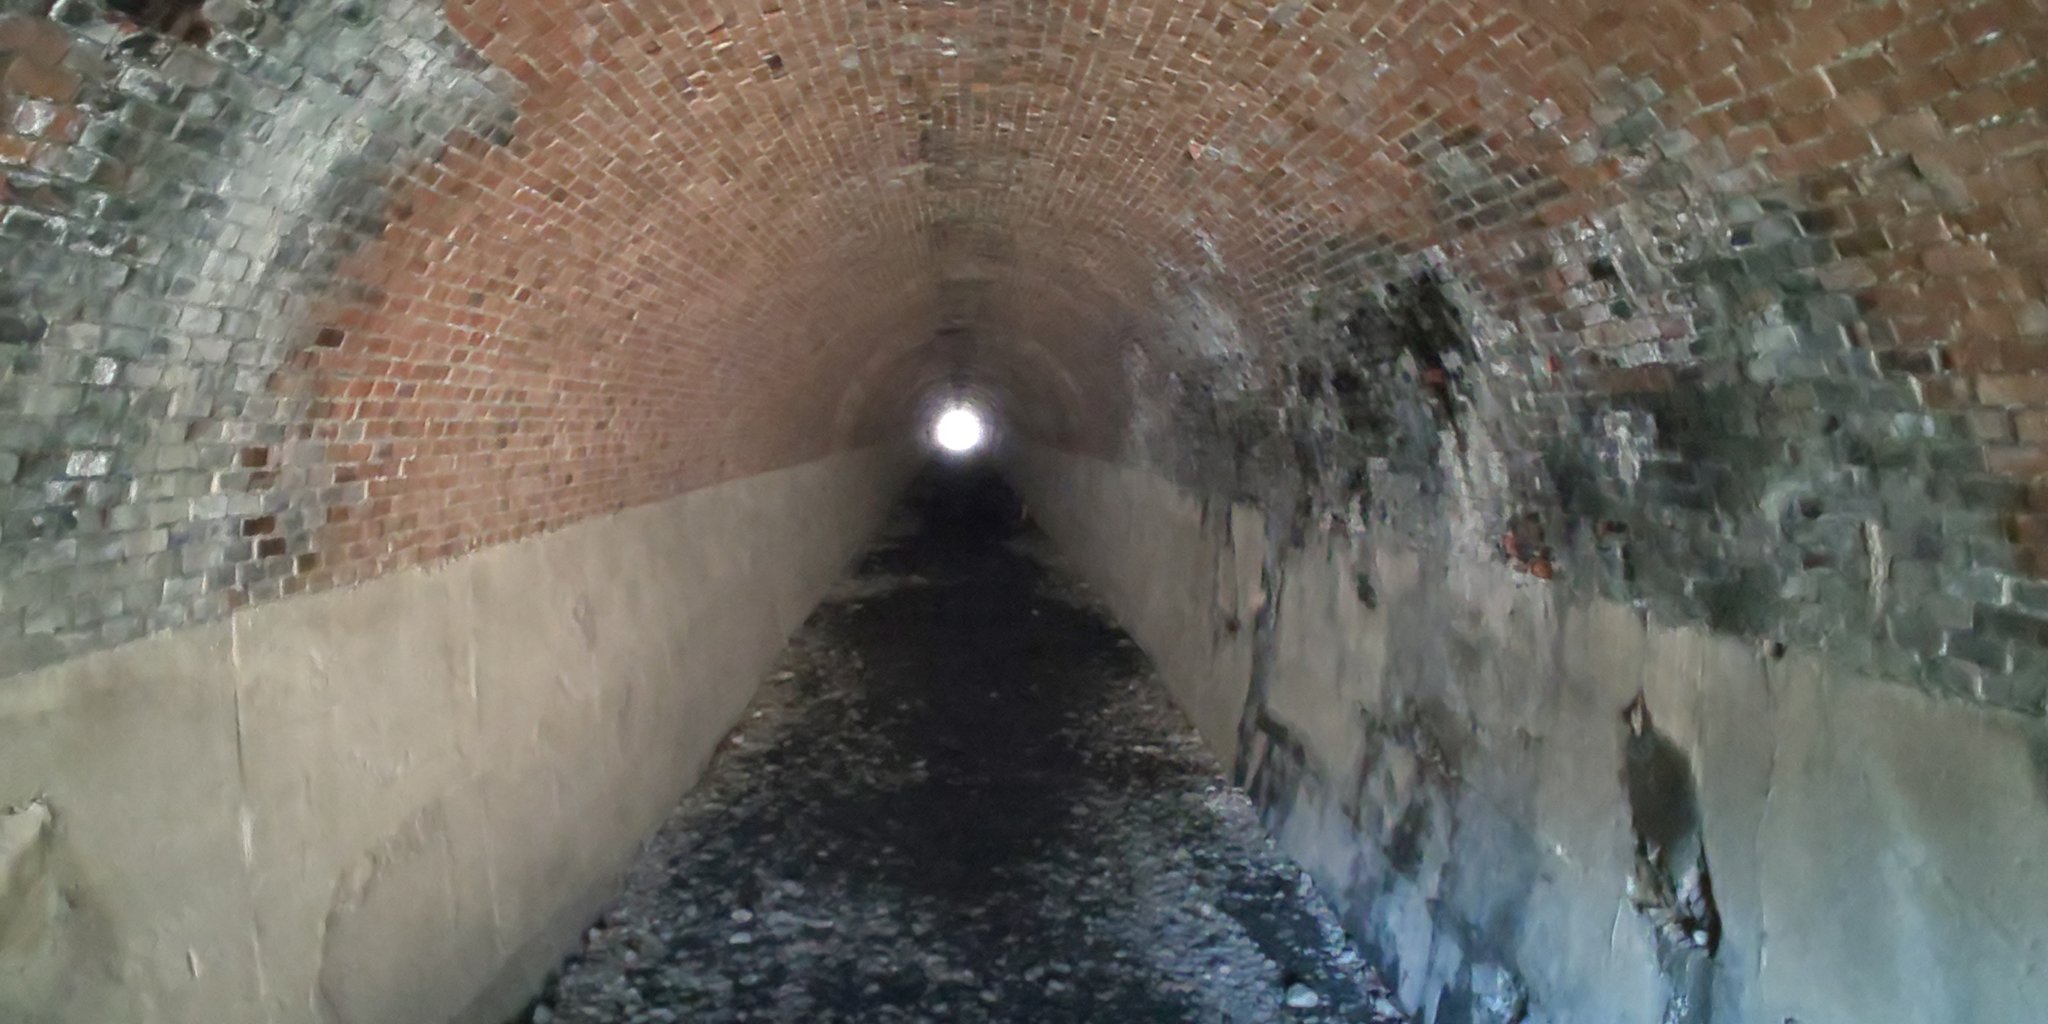 Sujun 釜石線の旧線のレンガトンネル発見 T Co Jy27lwtrmj Twitter